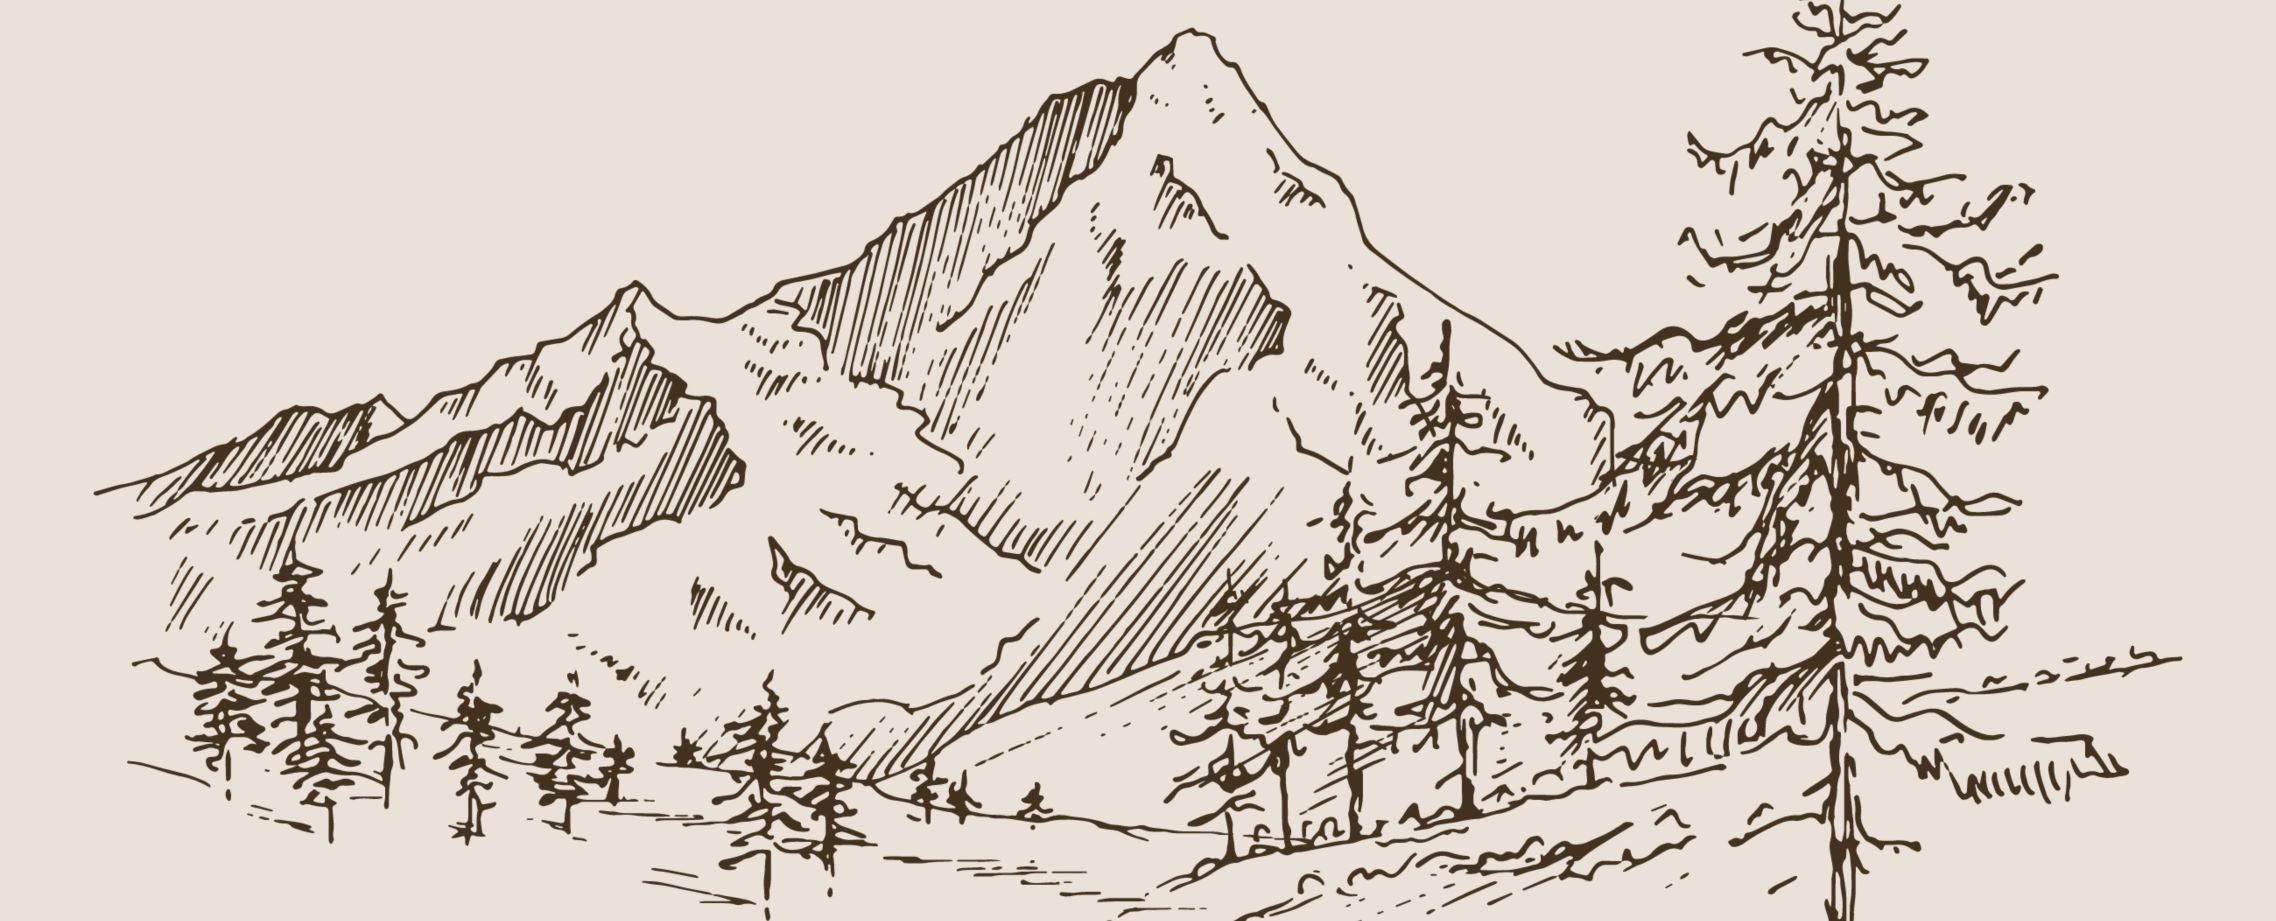 19152 Mountain Range Drawing Images Stock Photos  Vectors  Shutterstock